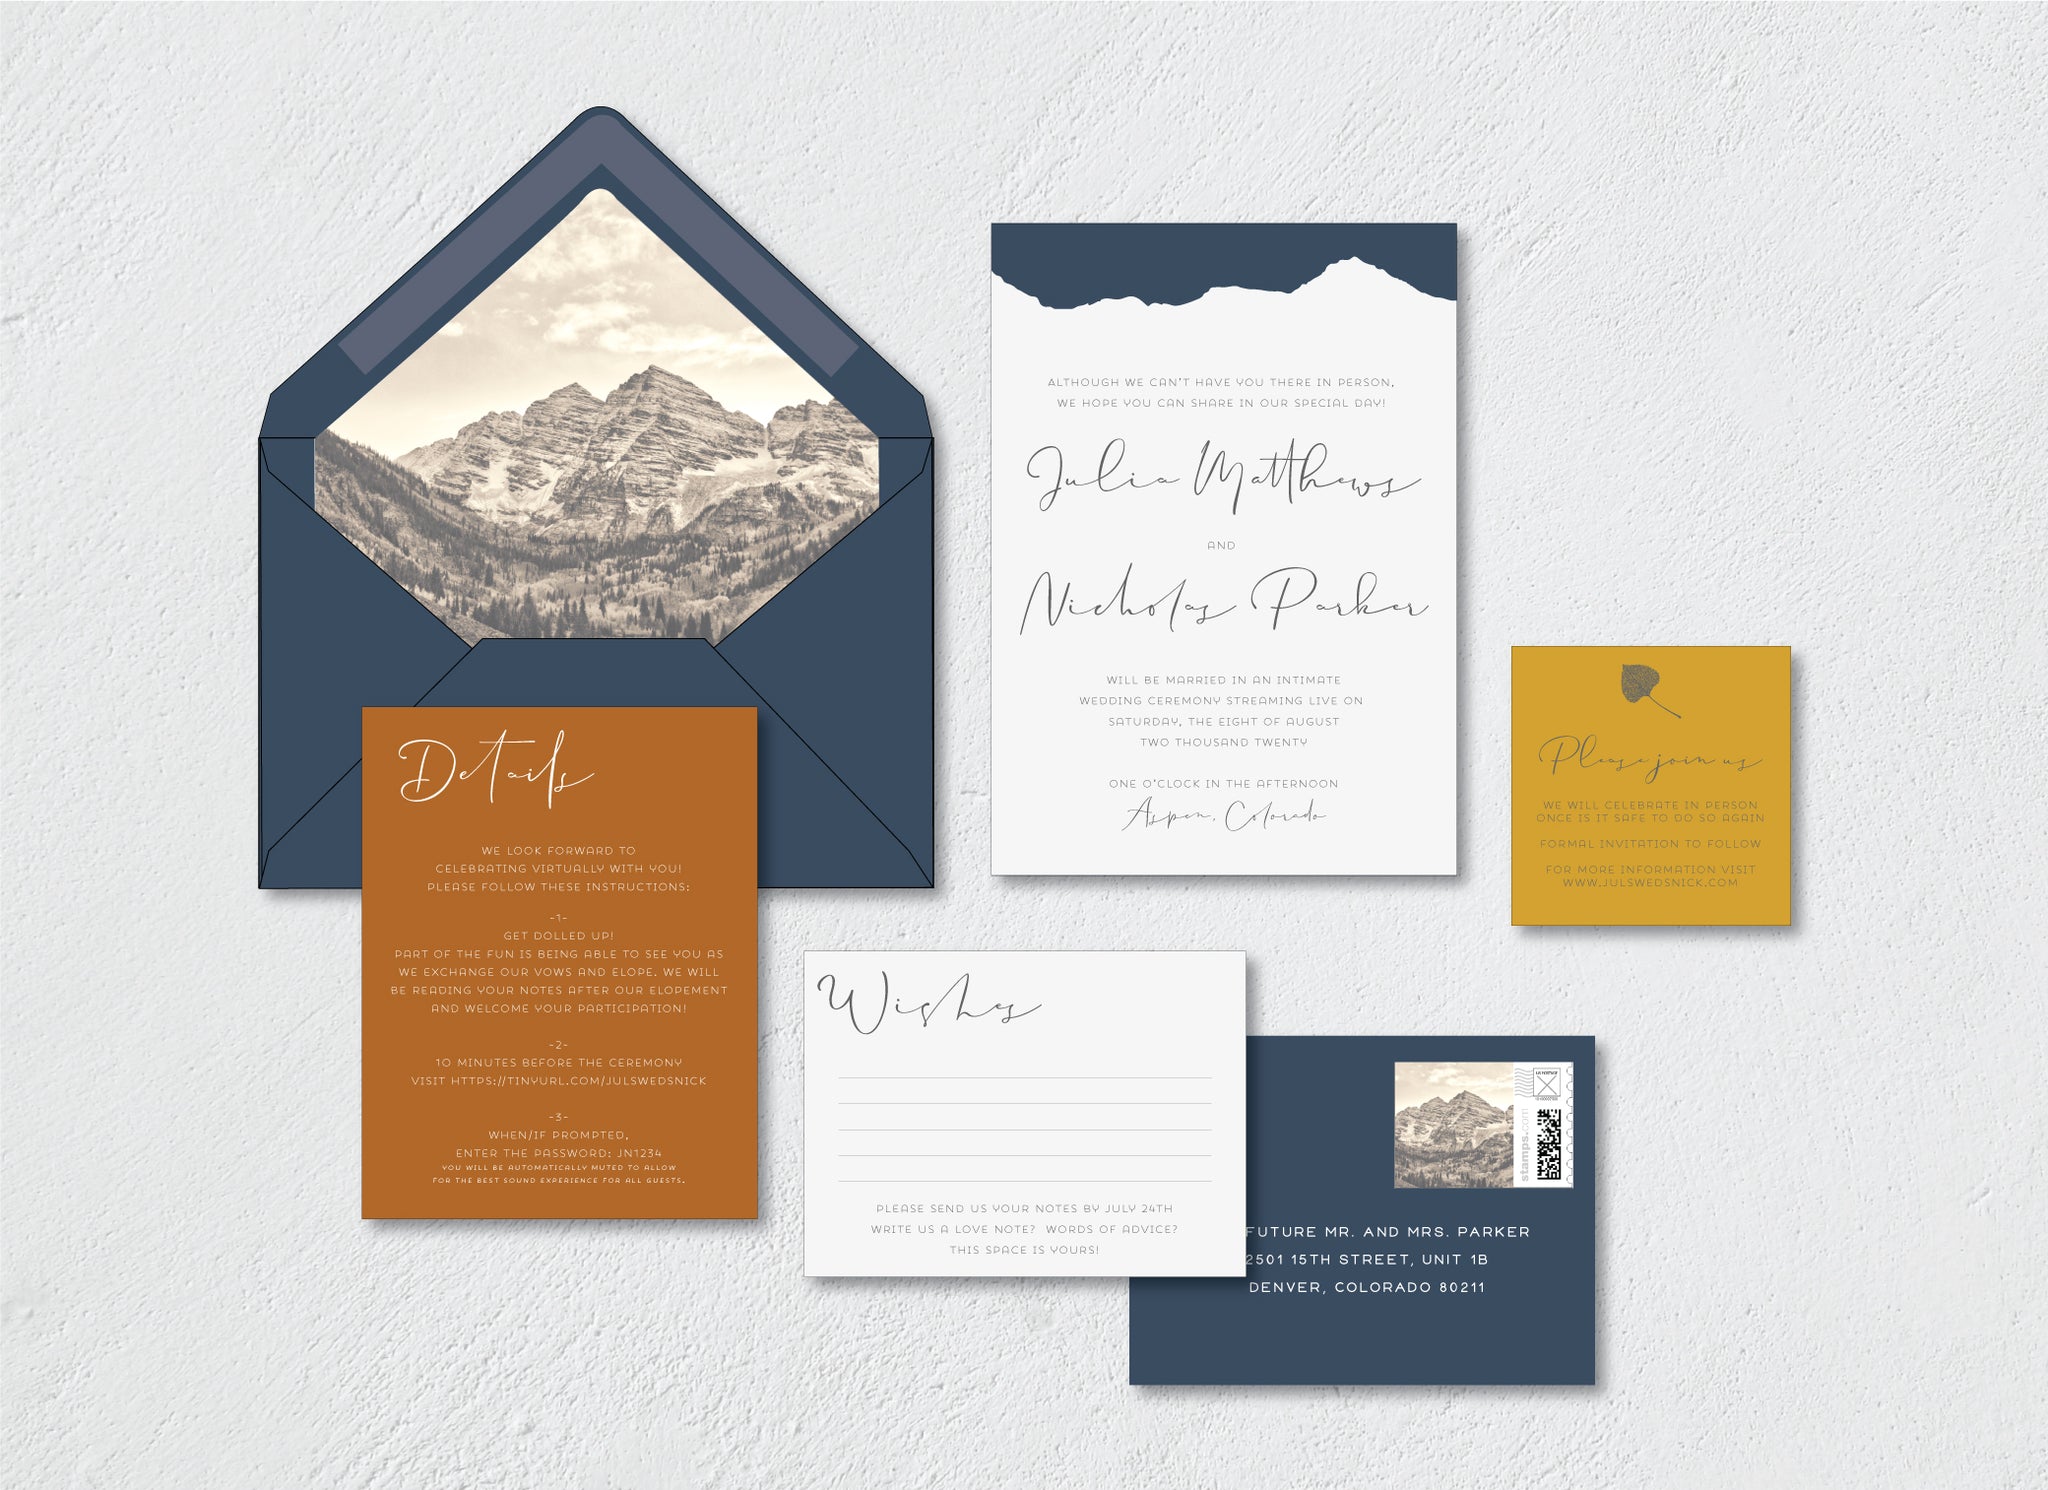 Lucky Onion Aspen Mountain Virtual Wedding Elopement Invitation Stationery Suite in Coronavirus Times